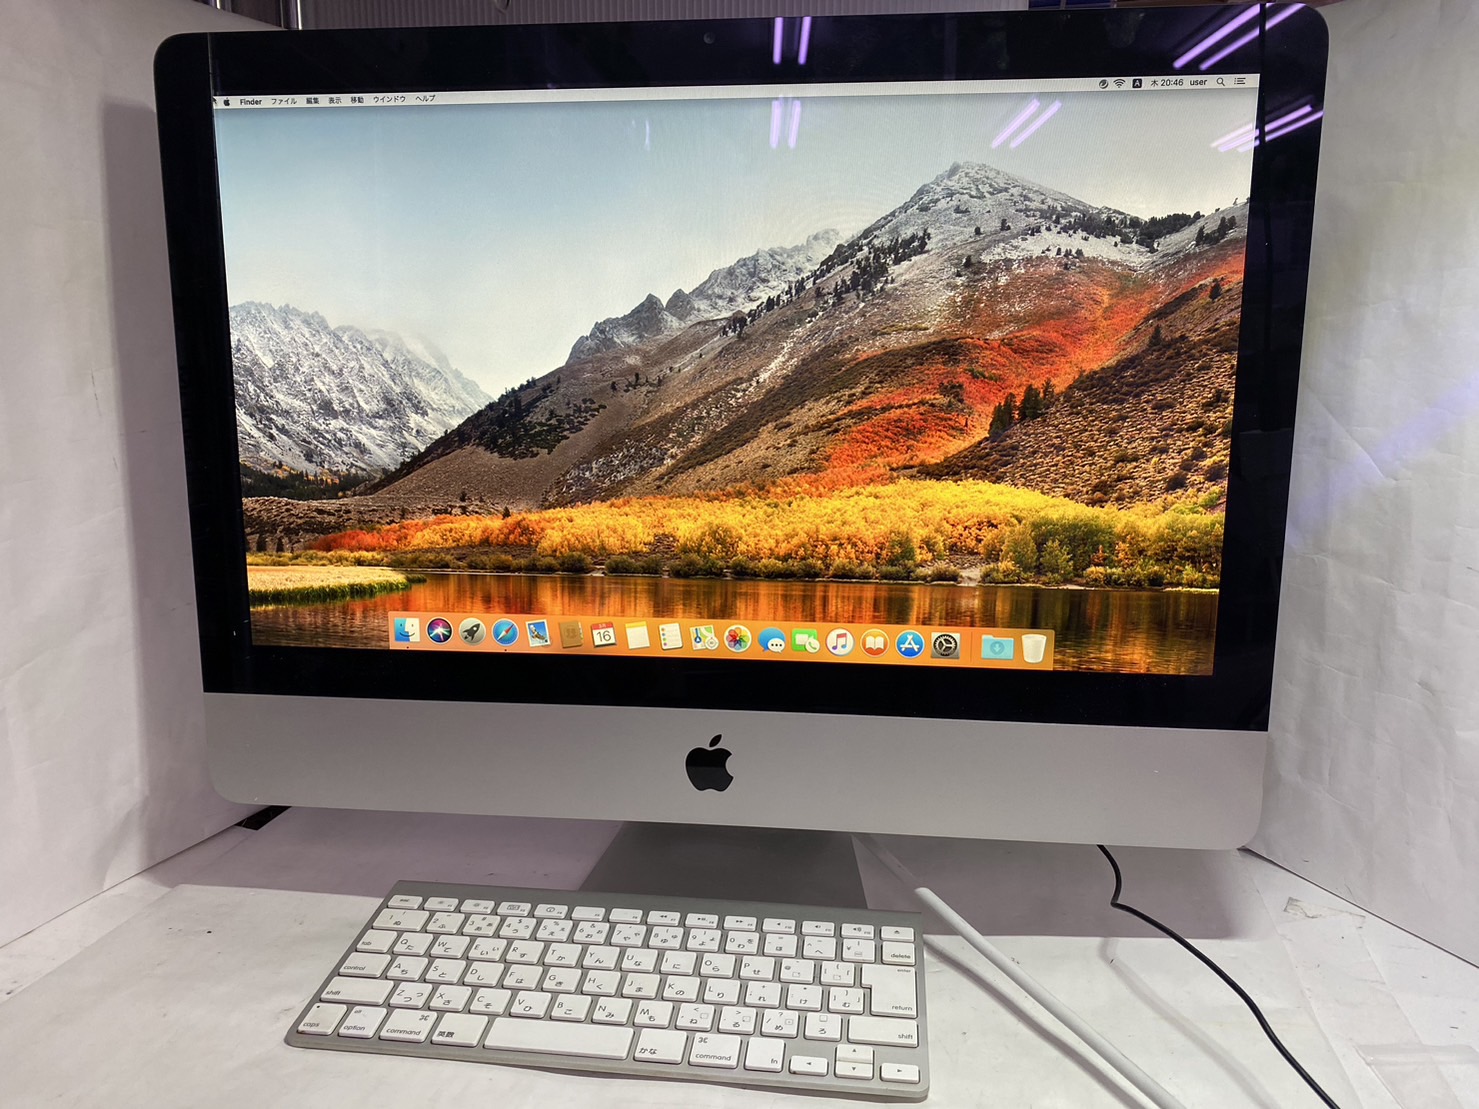 APPLE(アップル) iMac (21.5-inch, Mid 2010) MC509J/A A1311の激安 ...